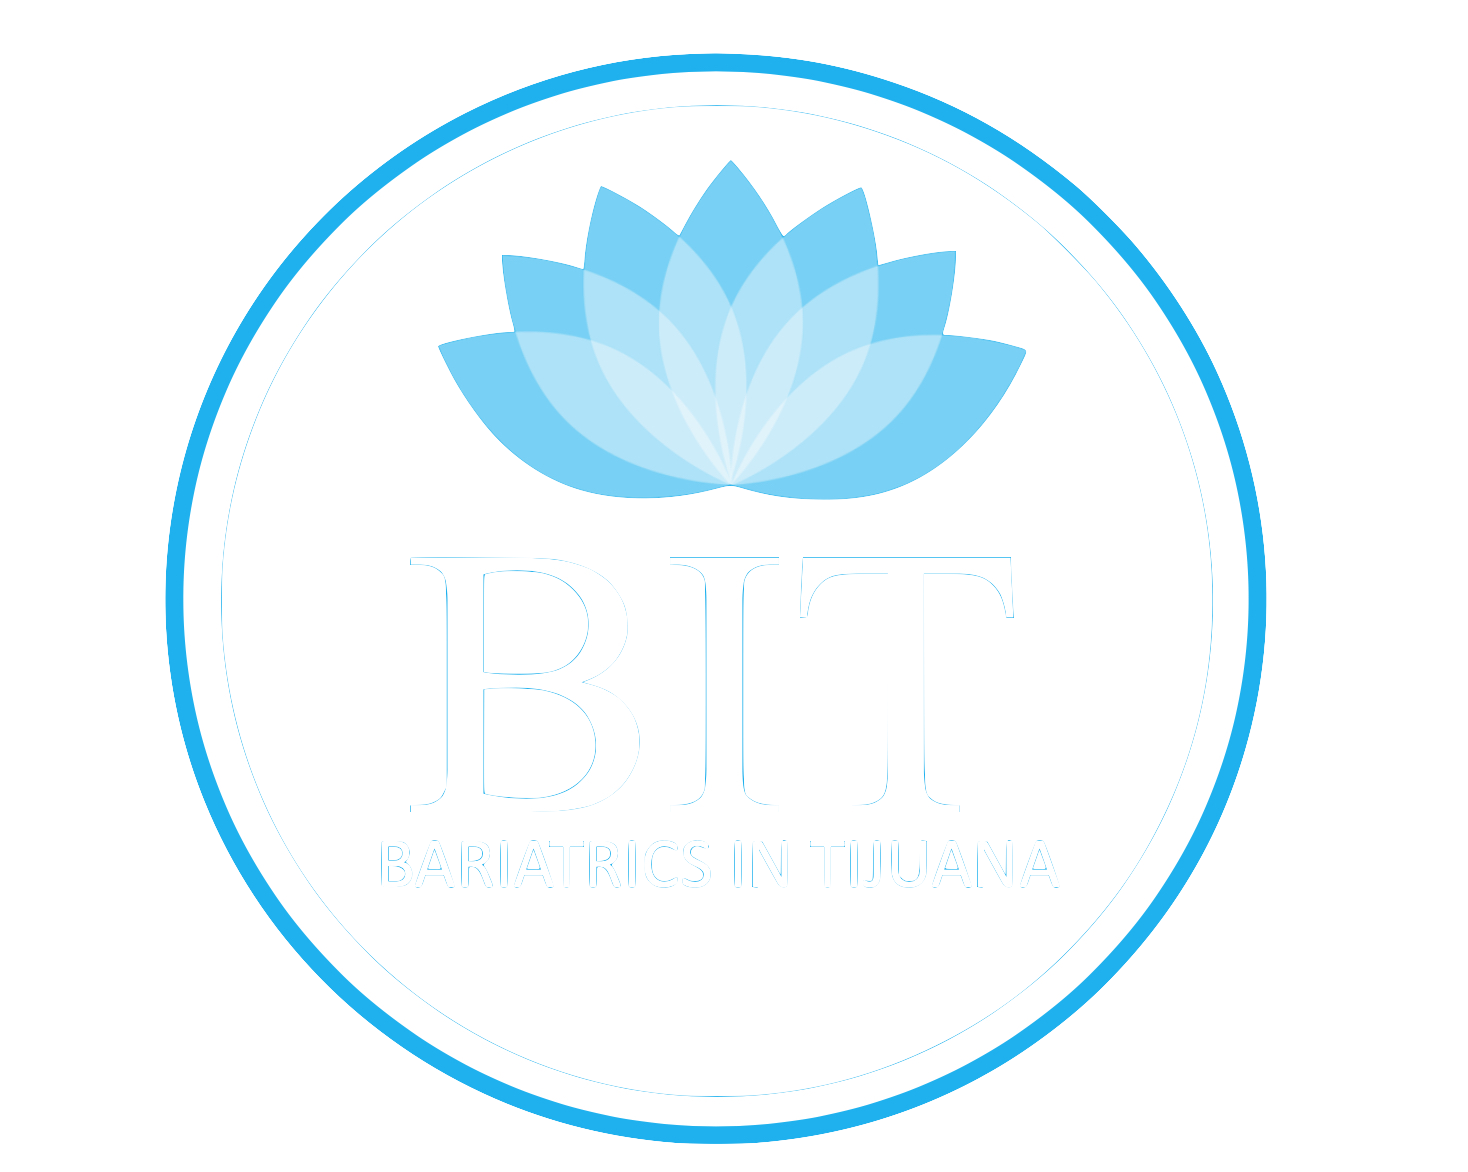 Bariatrics in Tijuana